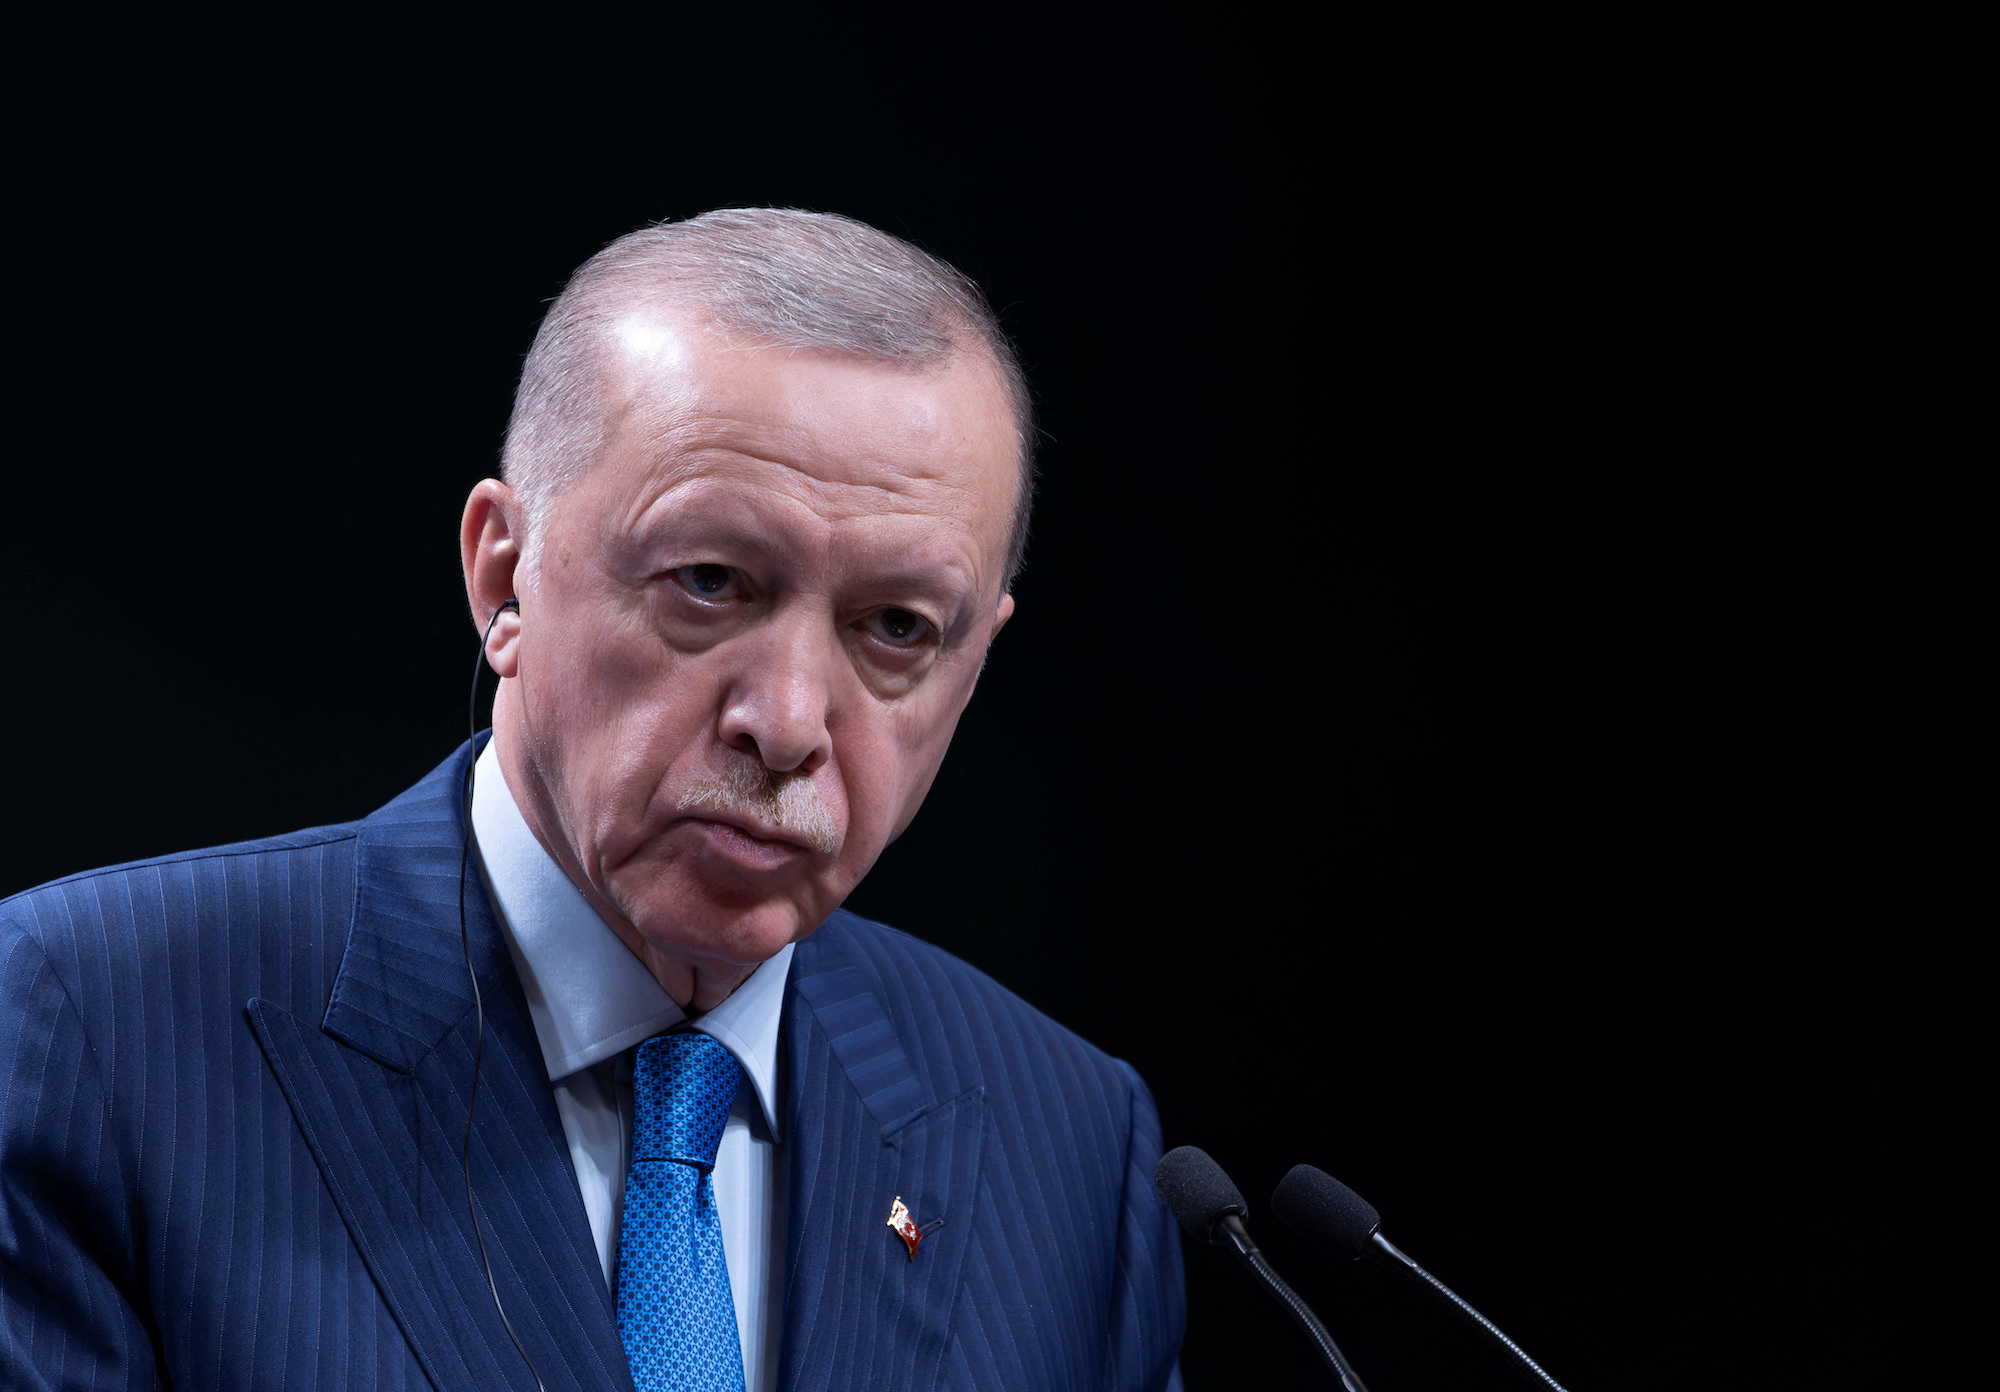 Turkey's President Tayyip Erdoğan speaks during a press conference in Ankara, Turkey, on Monday.